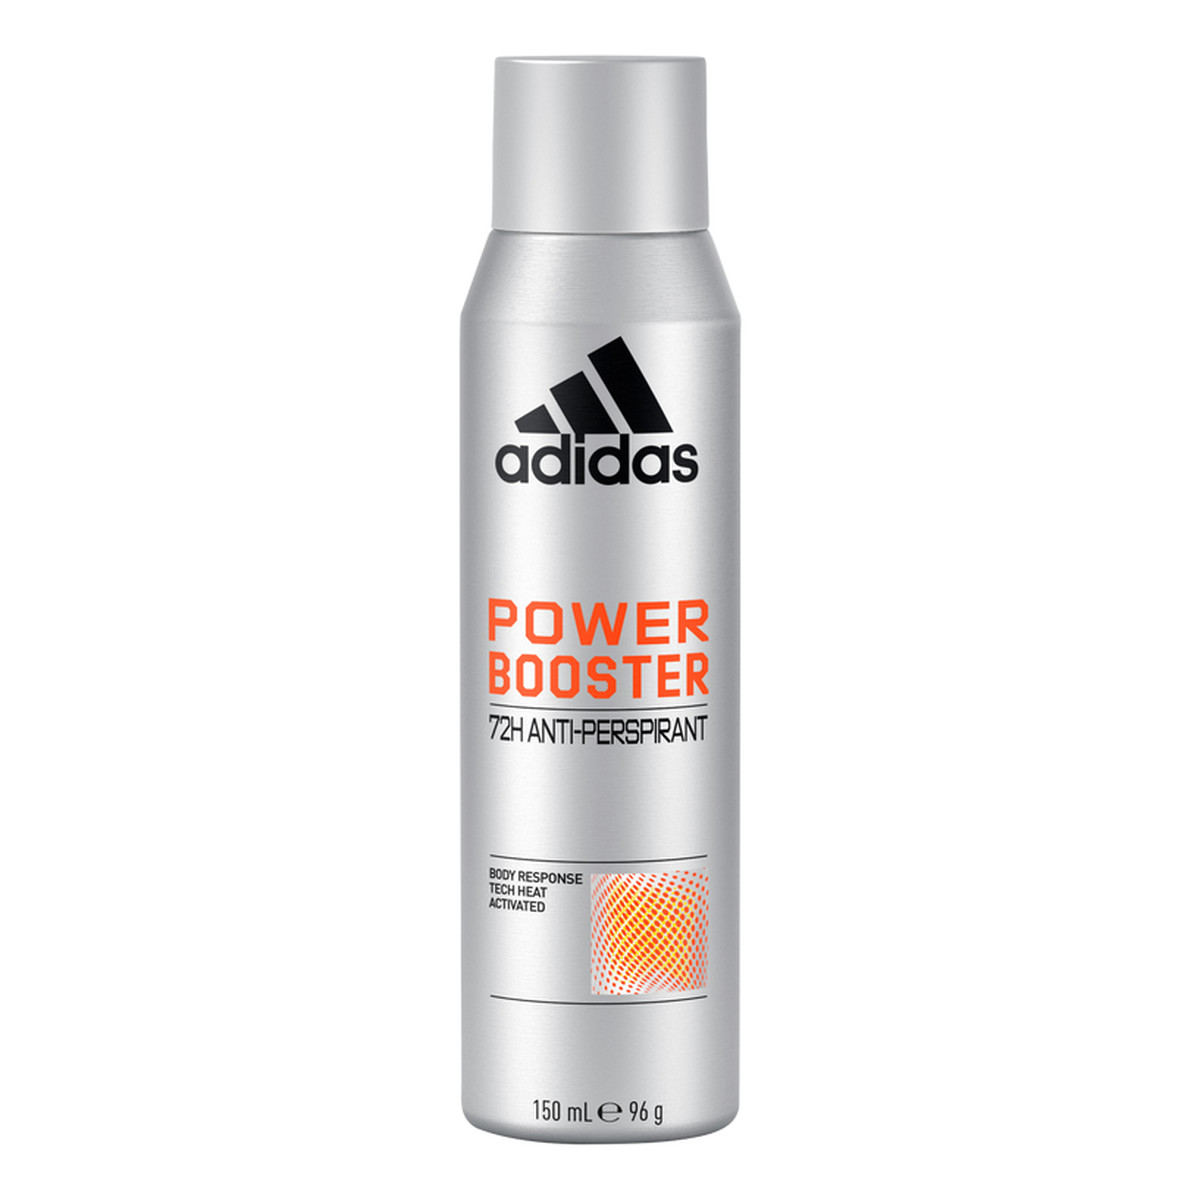 Adidas Power Booster Antyperspirant spray 72H 150ml